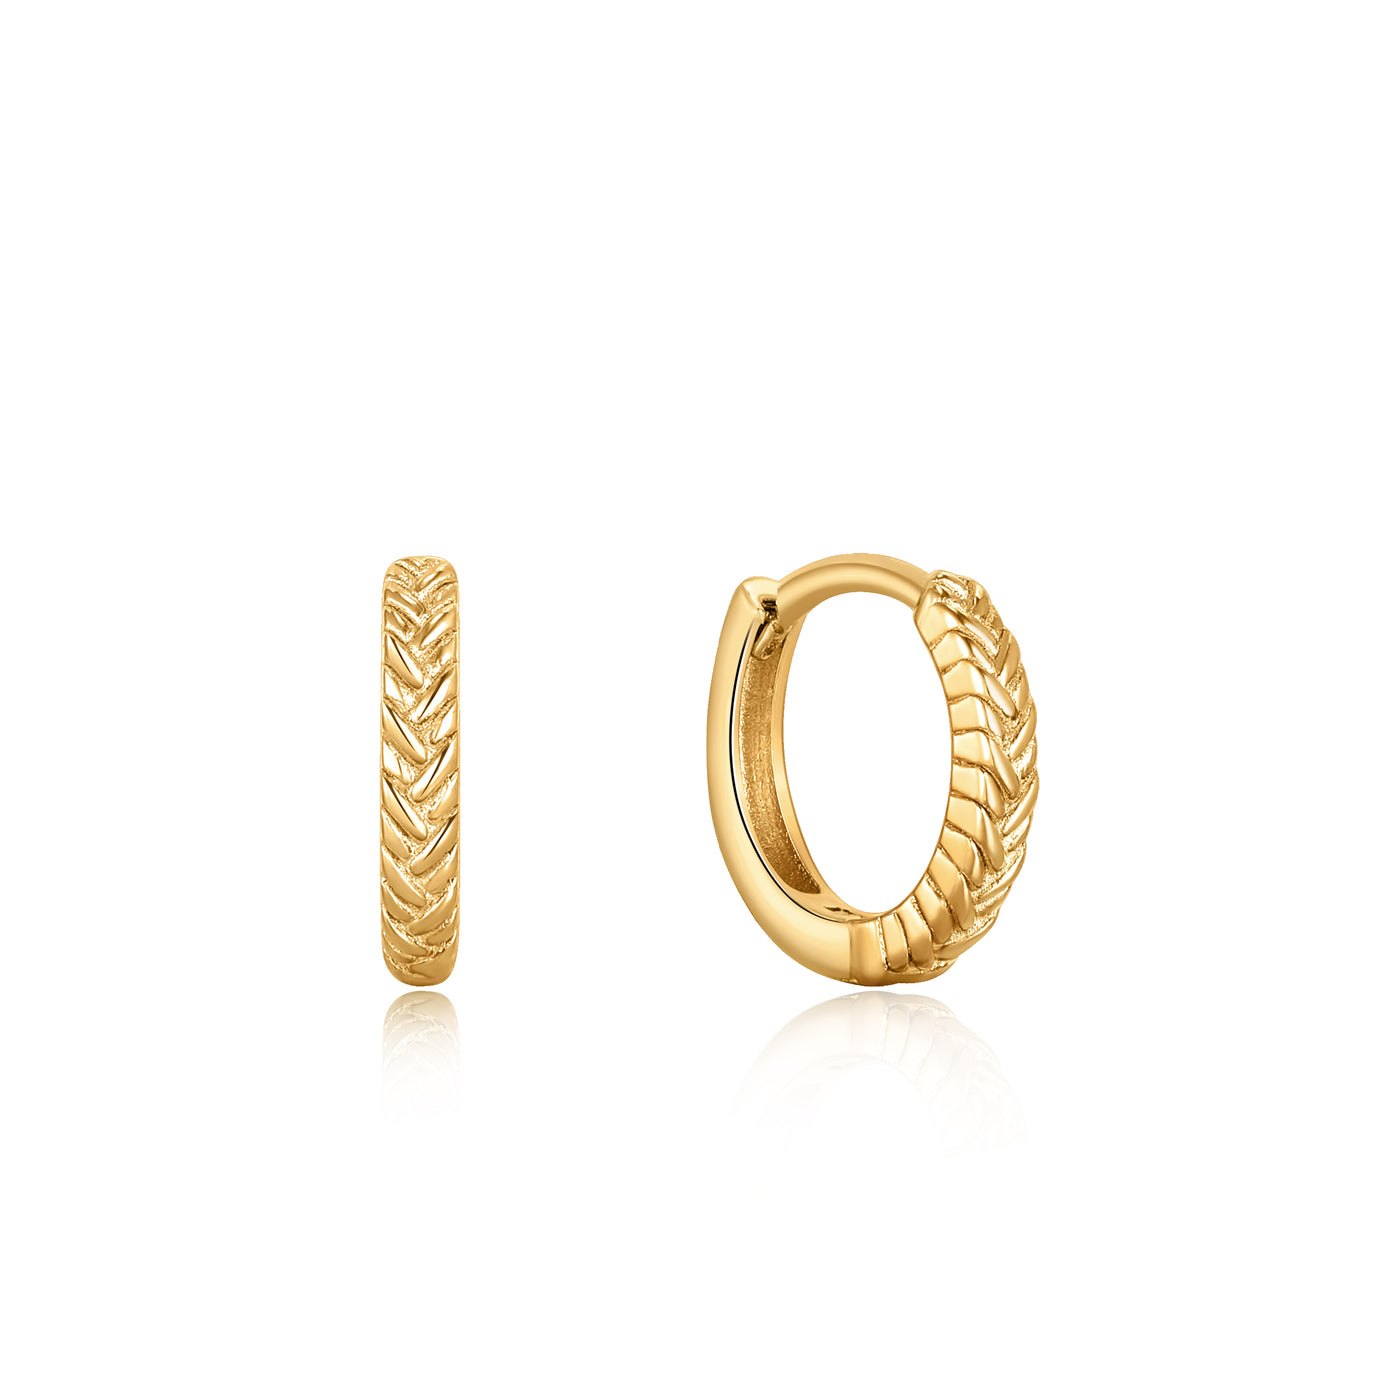 Ania Haie Yellow Gold Huggie Earrings E036-03G